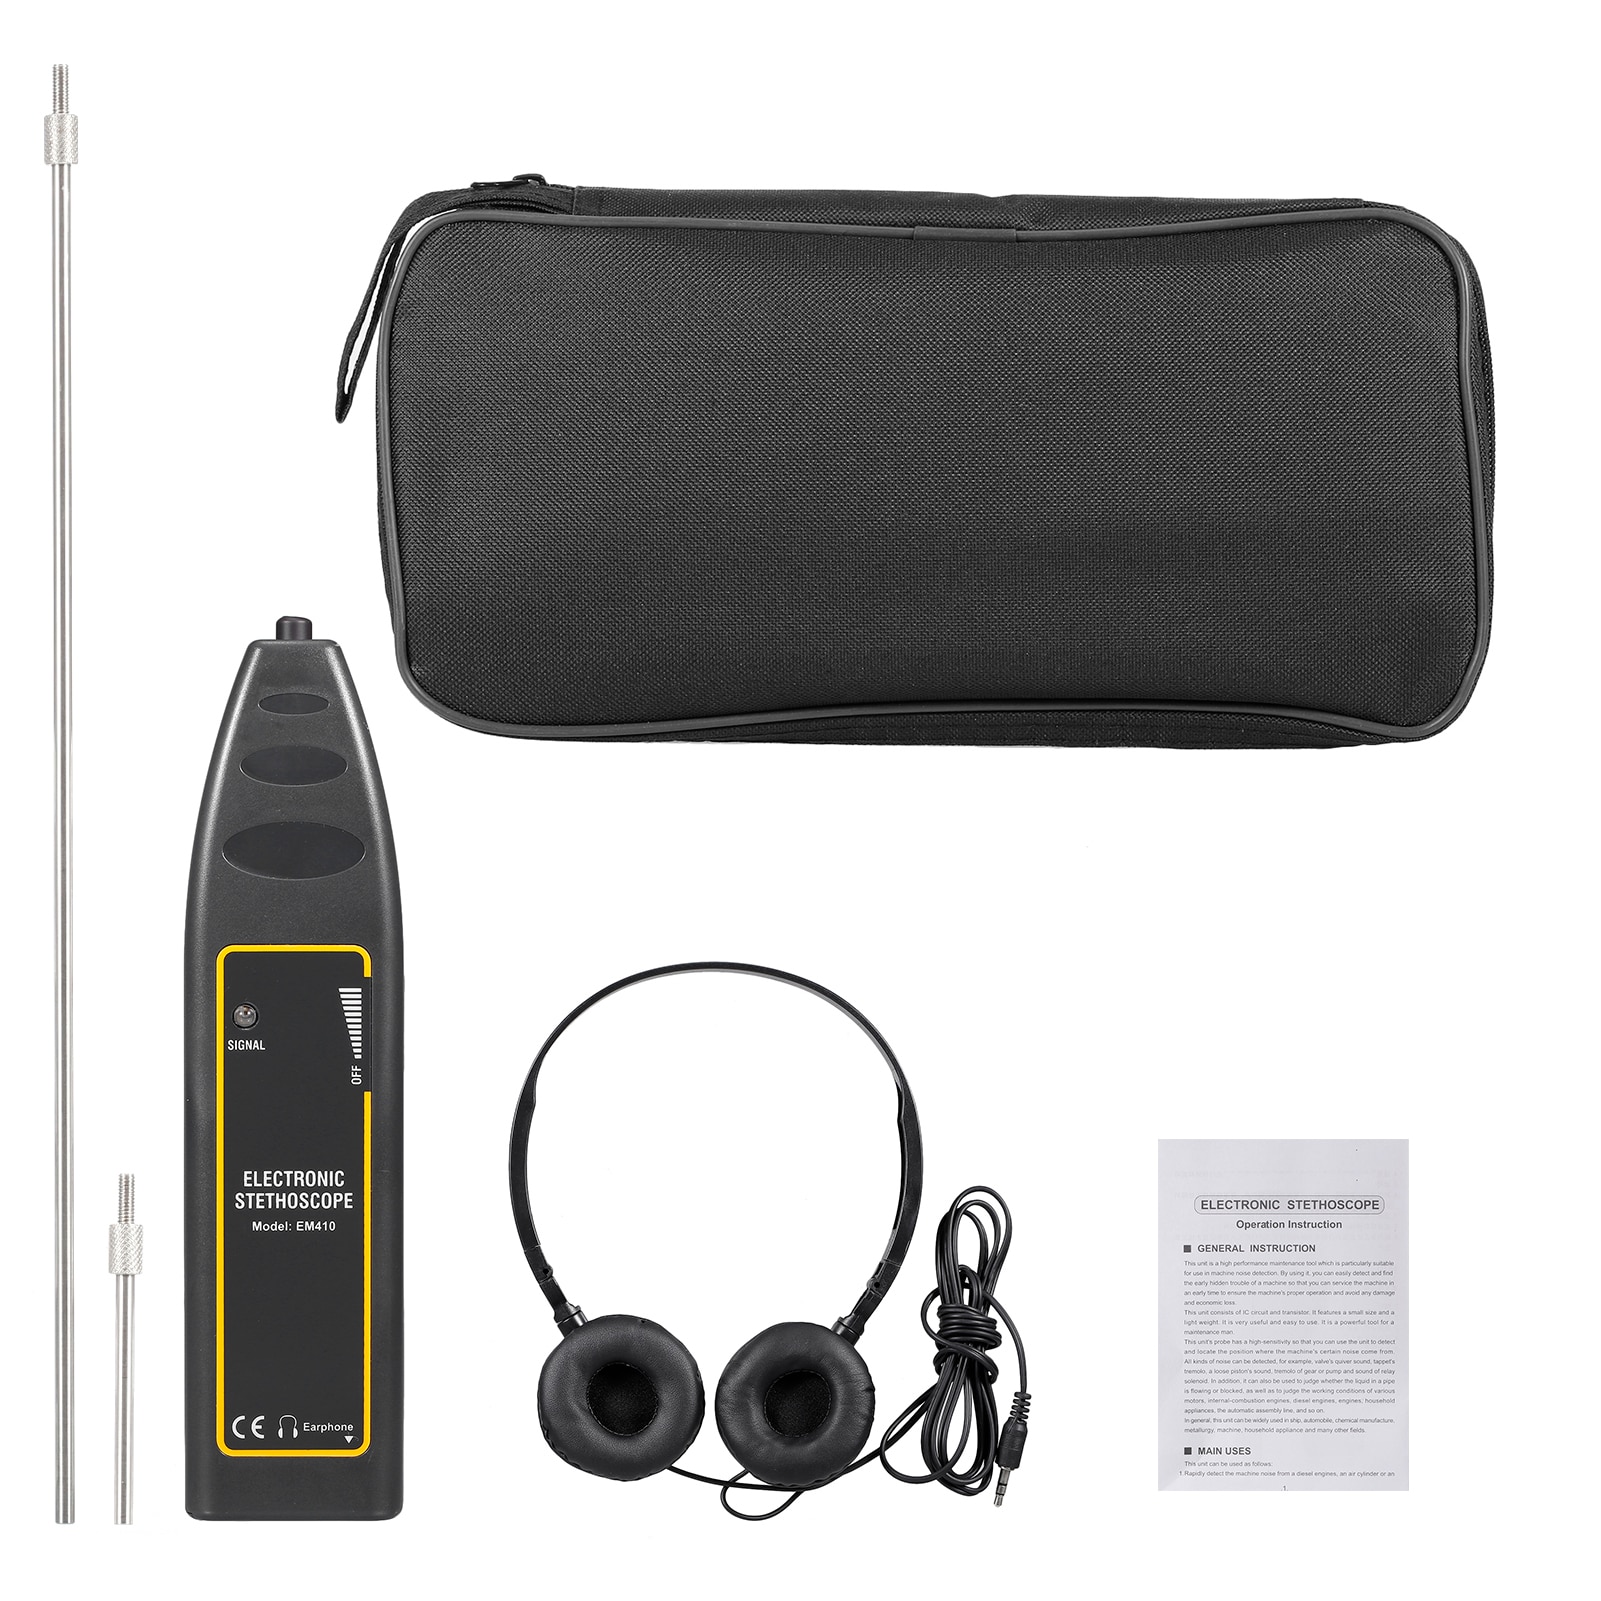 Car Electronic Stethoscope Sound Diagnostic Equipment 